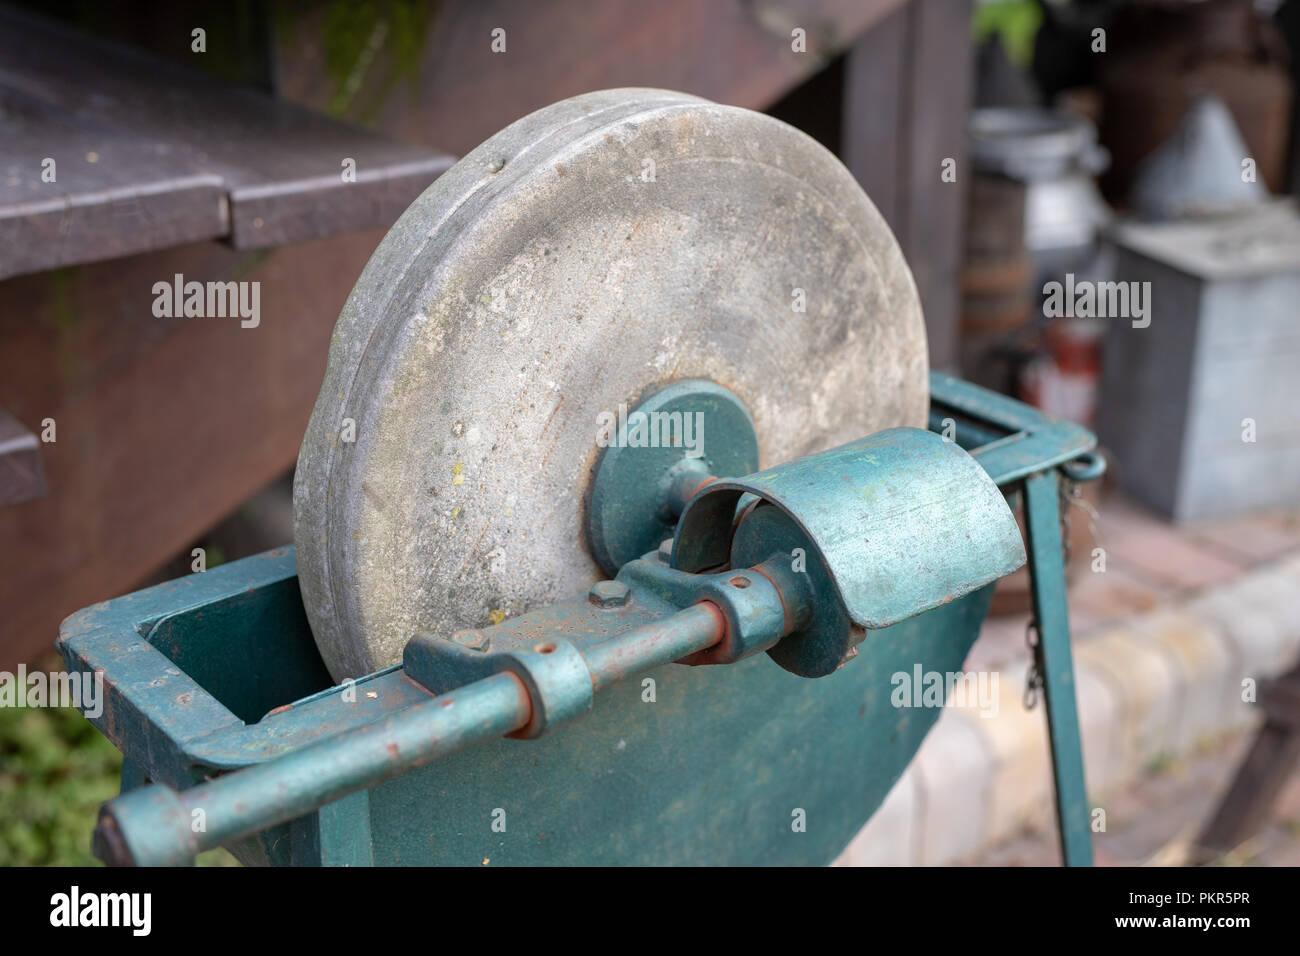 https://c8.alamy.com/comp/PKR5PR/an-old-whetstone-for-sharpening-knives-grinding-wheel-on-an-old-tripod-season-of-the-autumn-PKR5PR.jpg